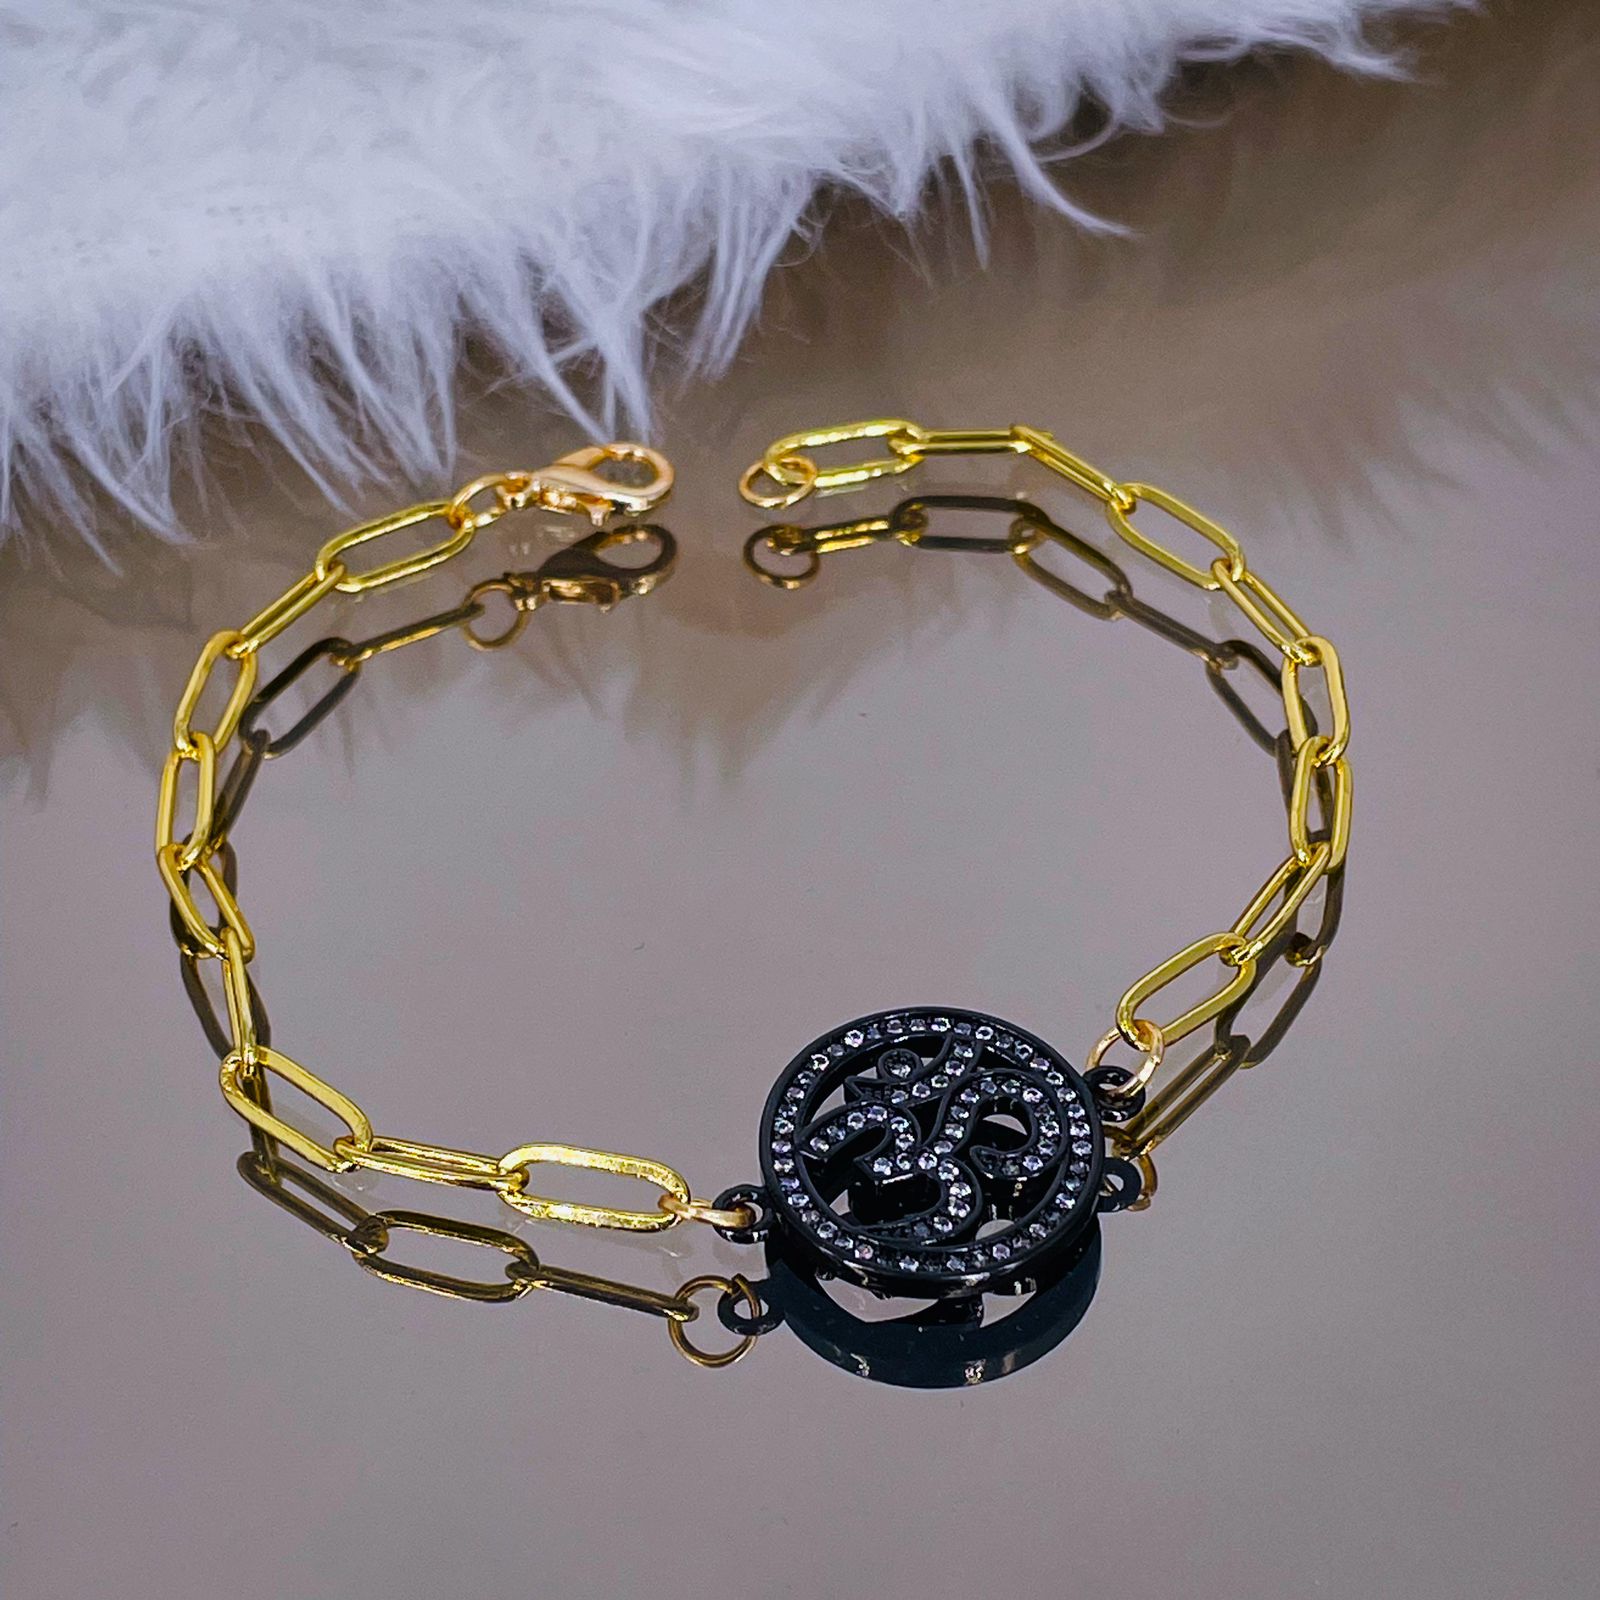 Amazon.com: OM bracelet, women bracelet with Tibetan silver Om charm, Hindu  symbol, black cord, gift for her, yoga bracelet, lucky charm, chakra  jewelry : Handmade Products